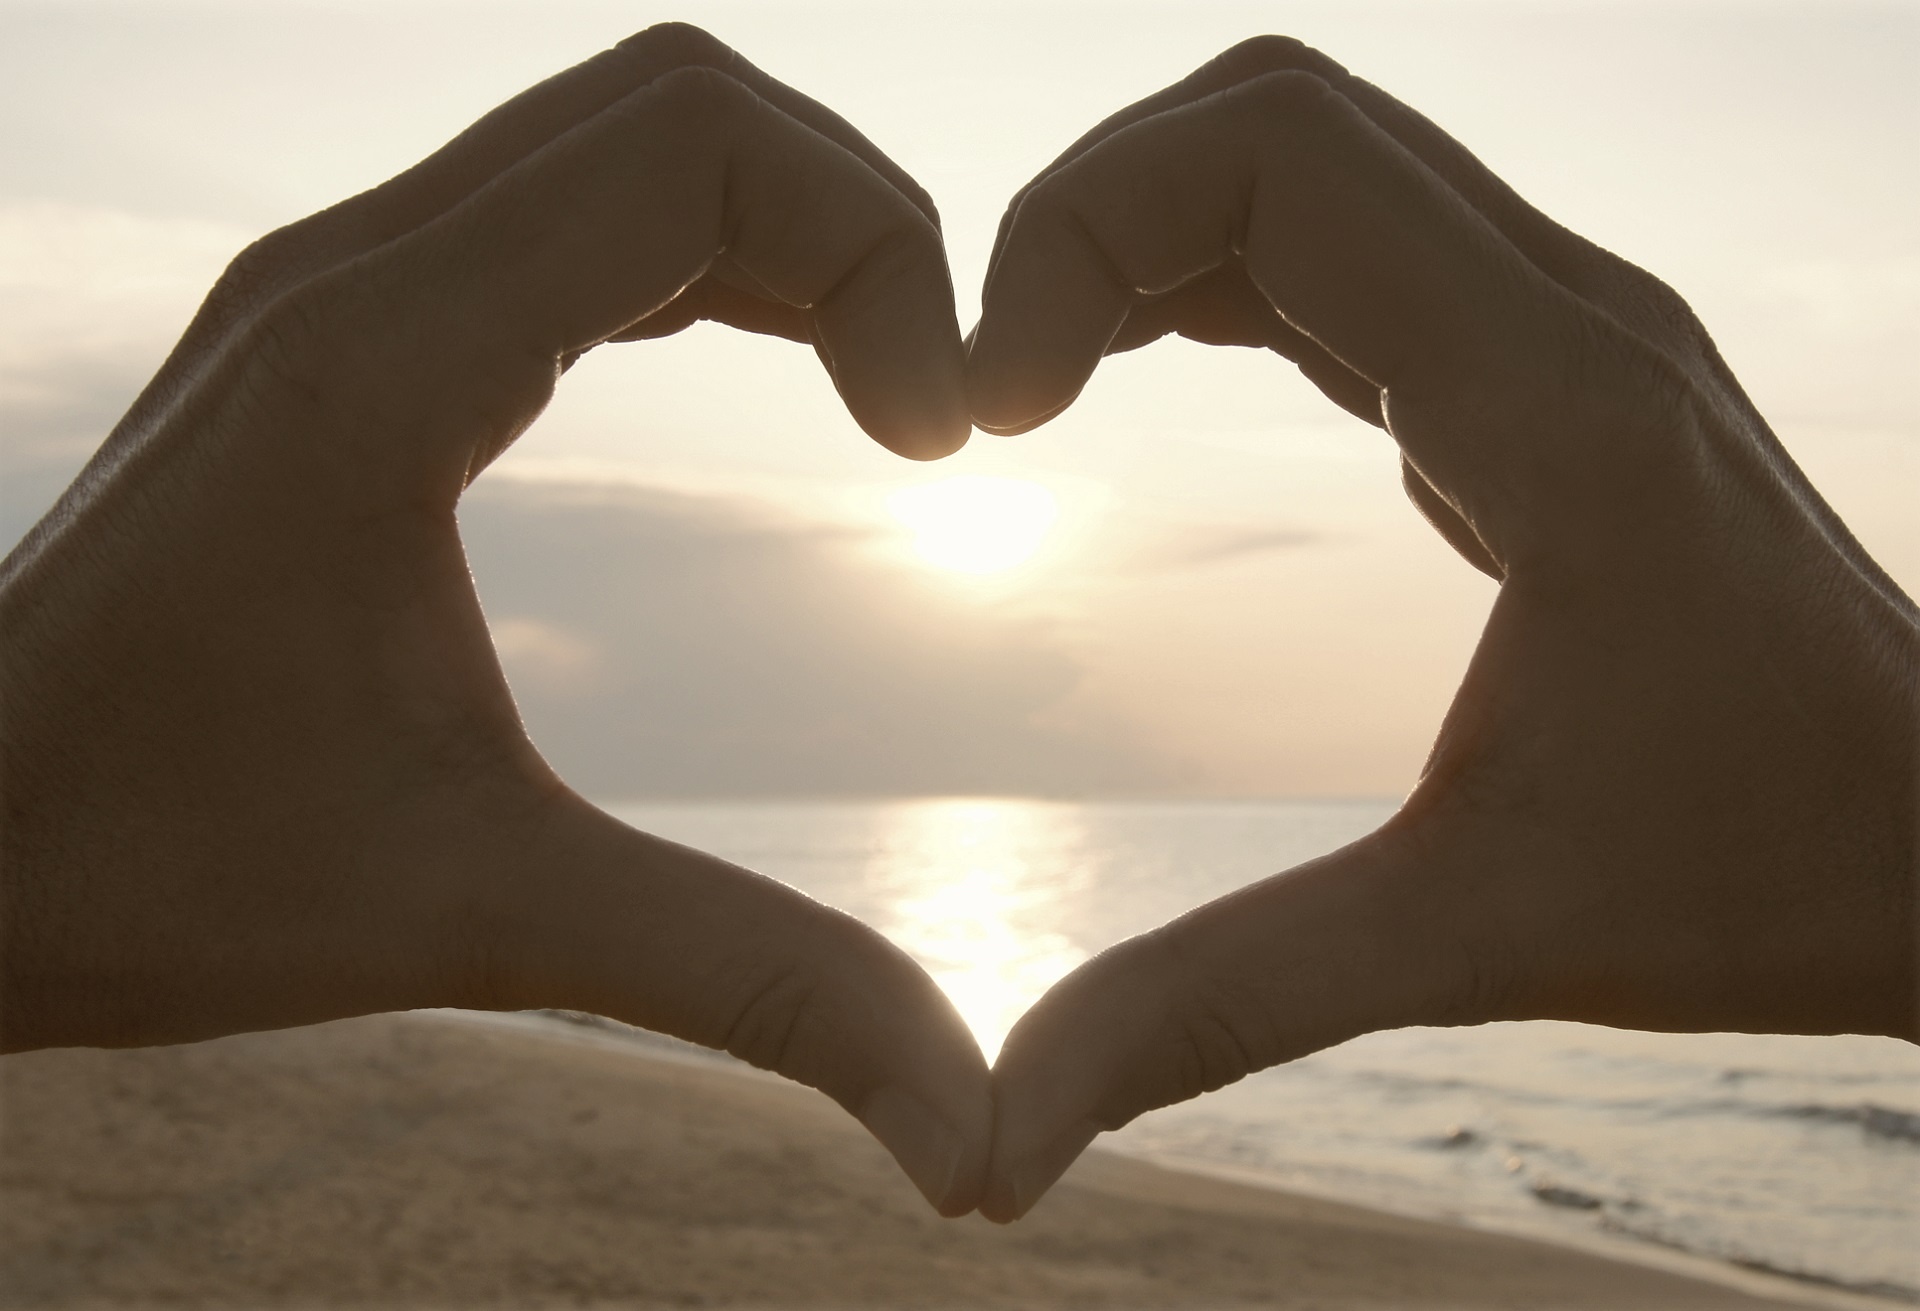 Heart,hands,sunset,beach,public domain - free image from needpix.com